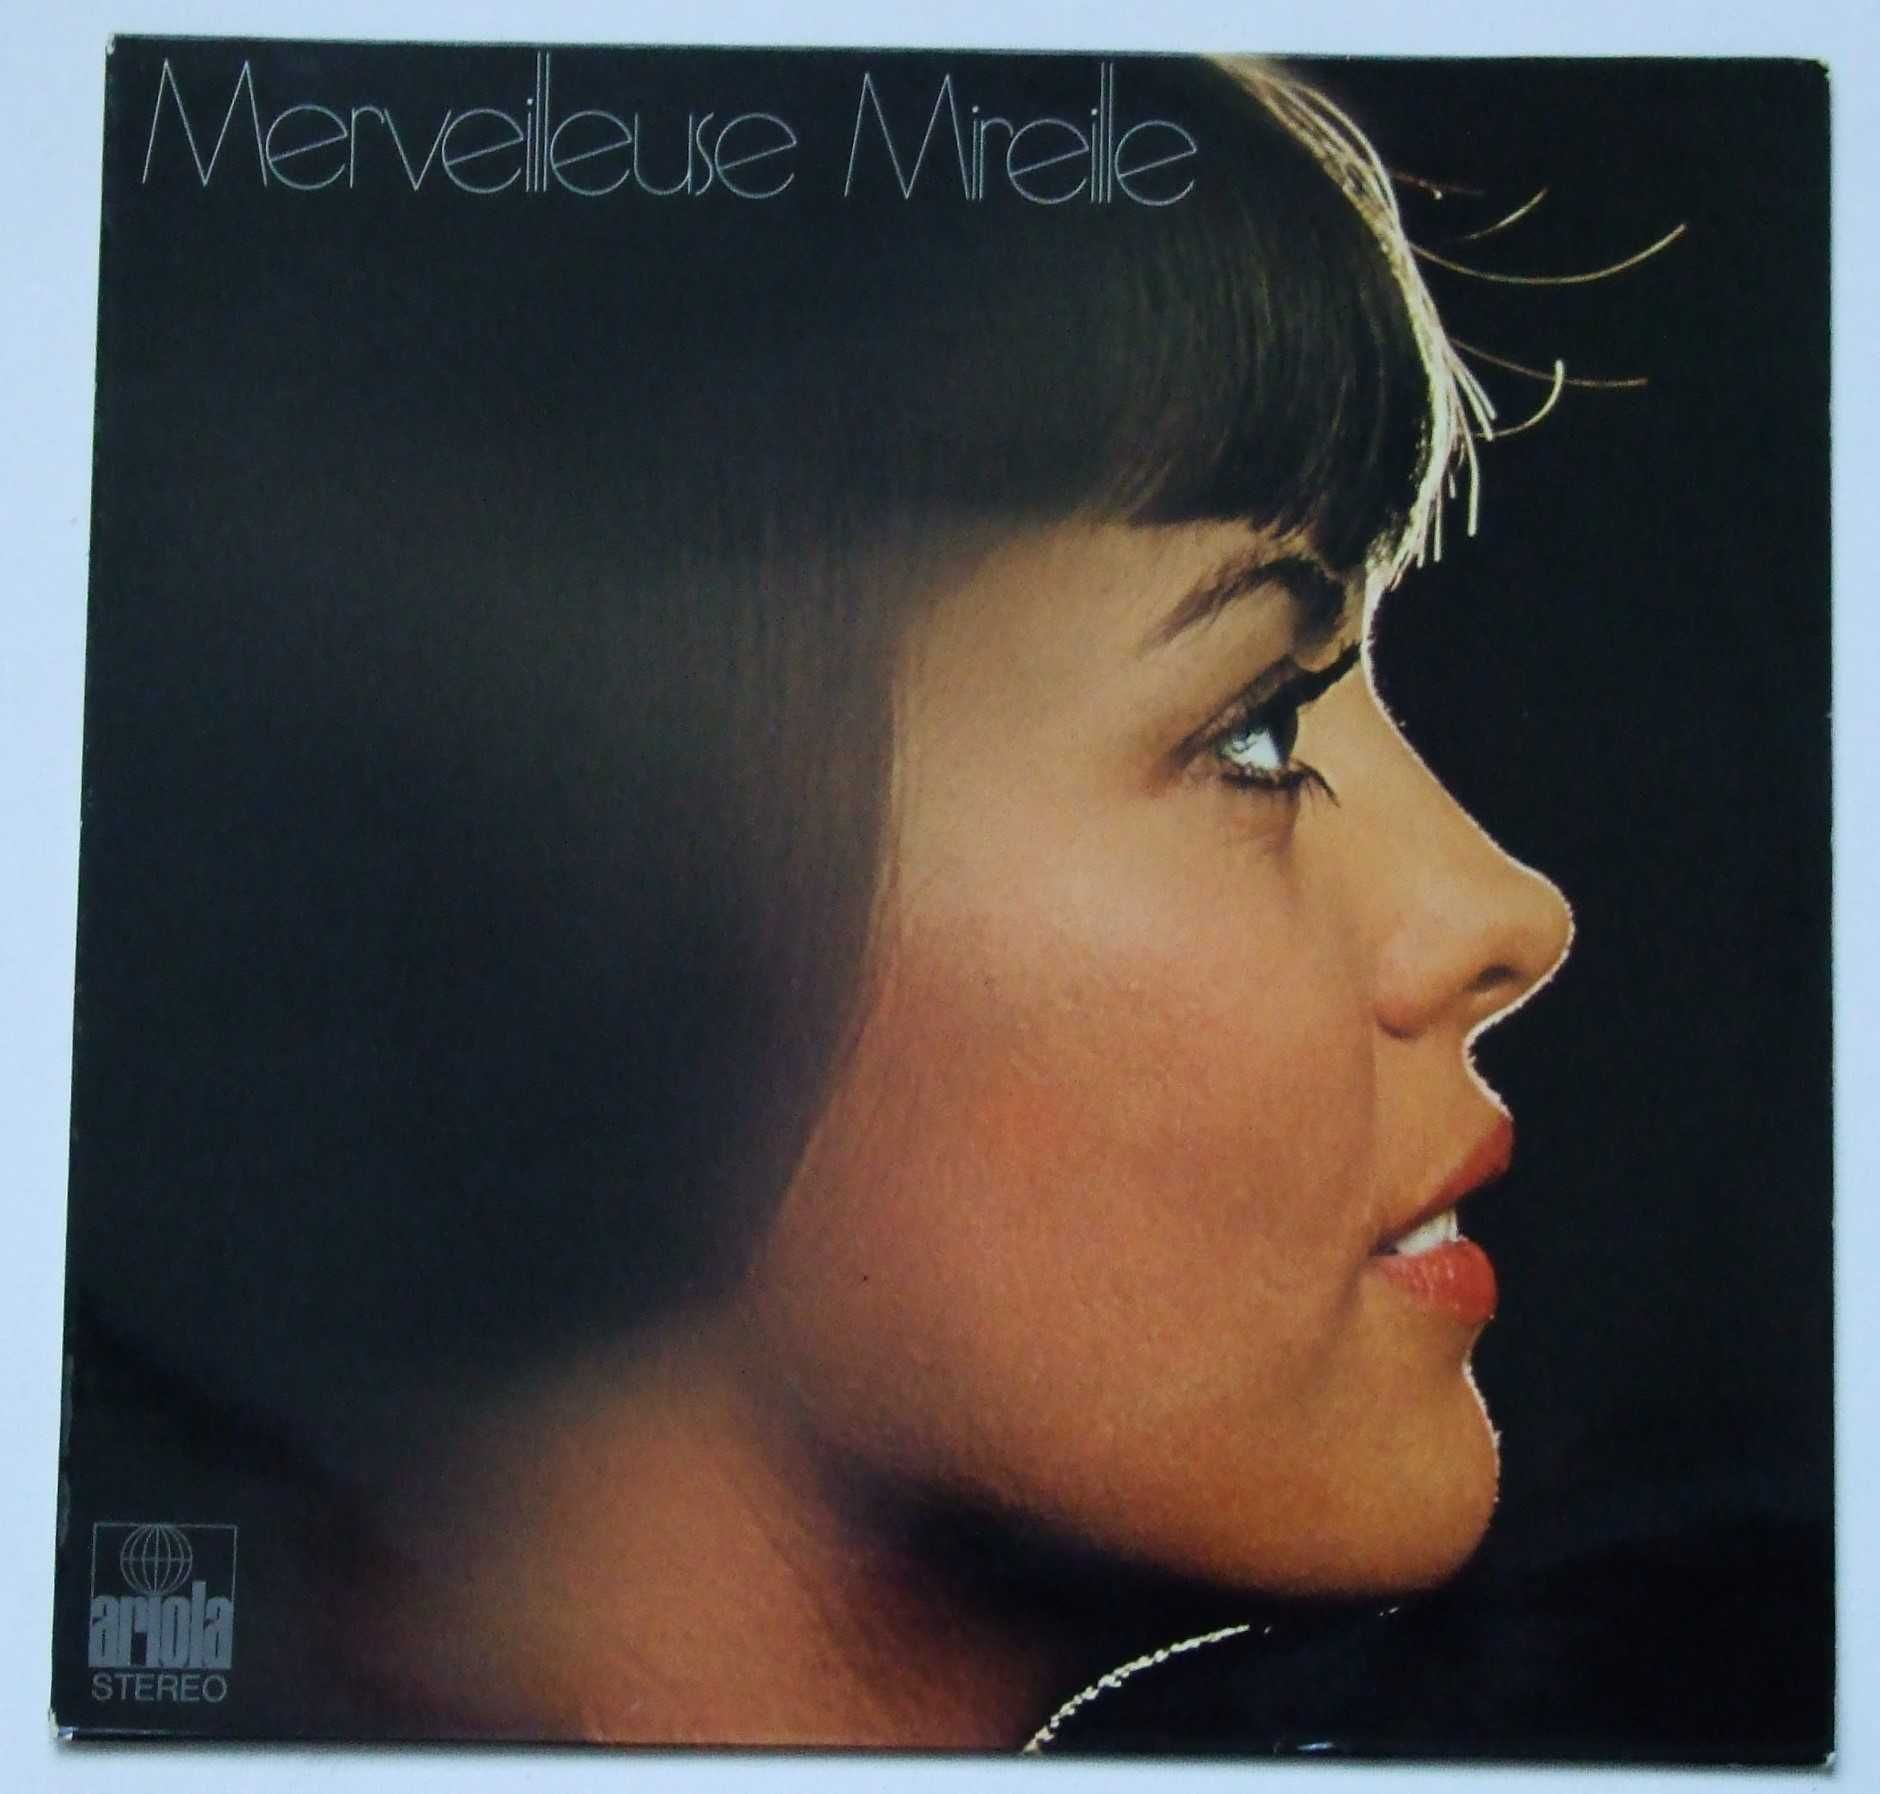 Mireille Mathieu – Merveilleuse Mireille